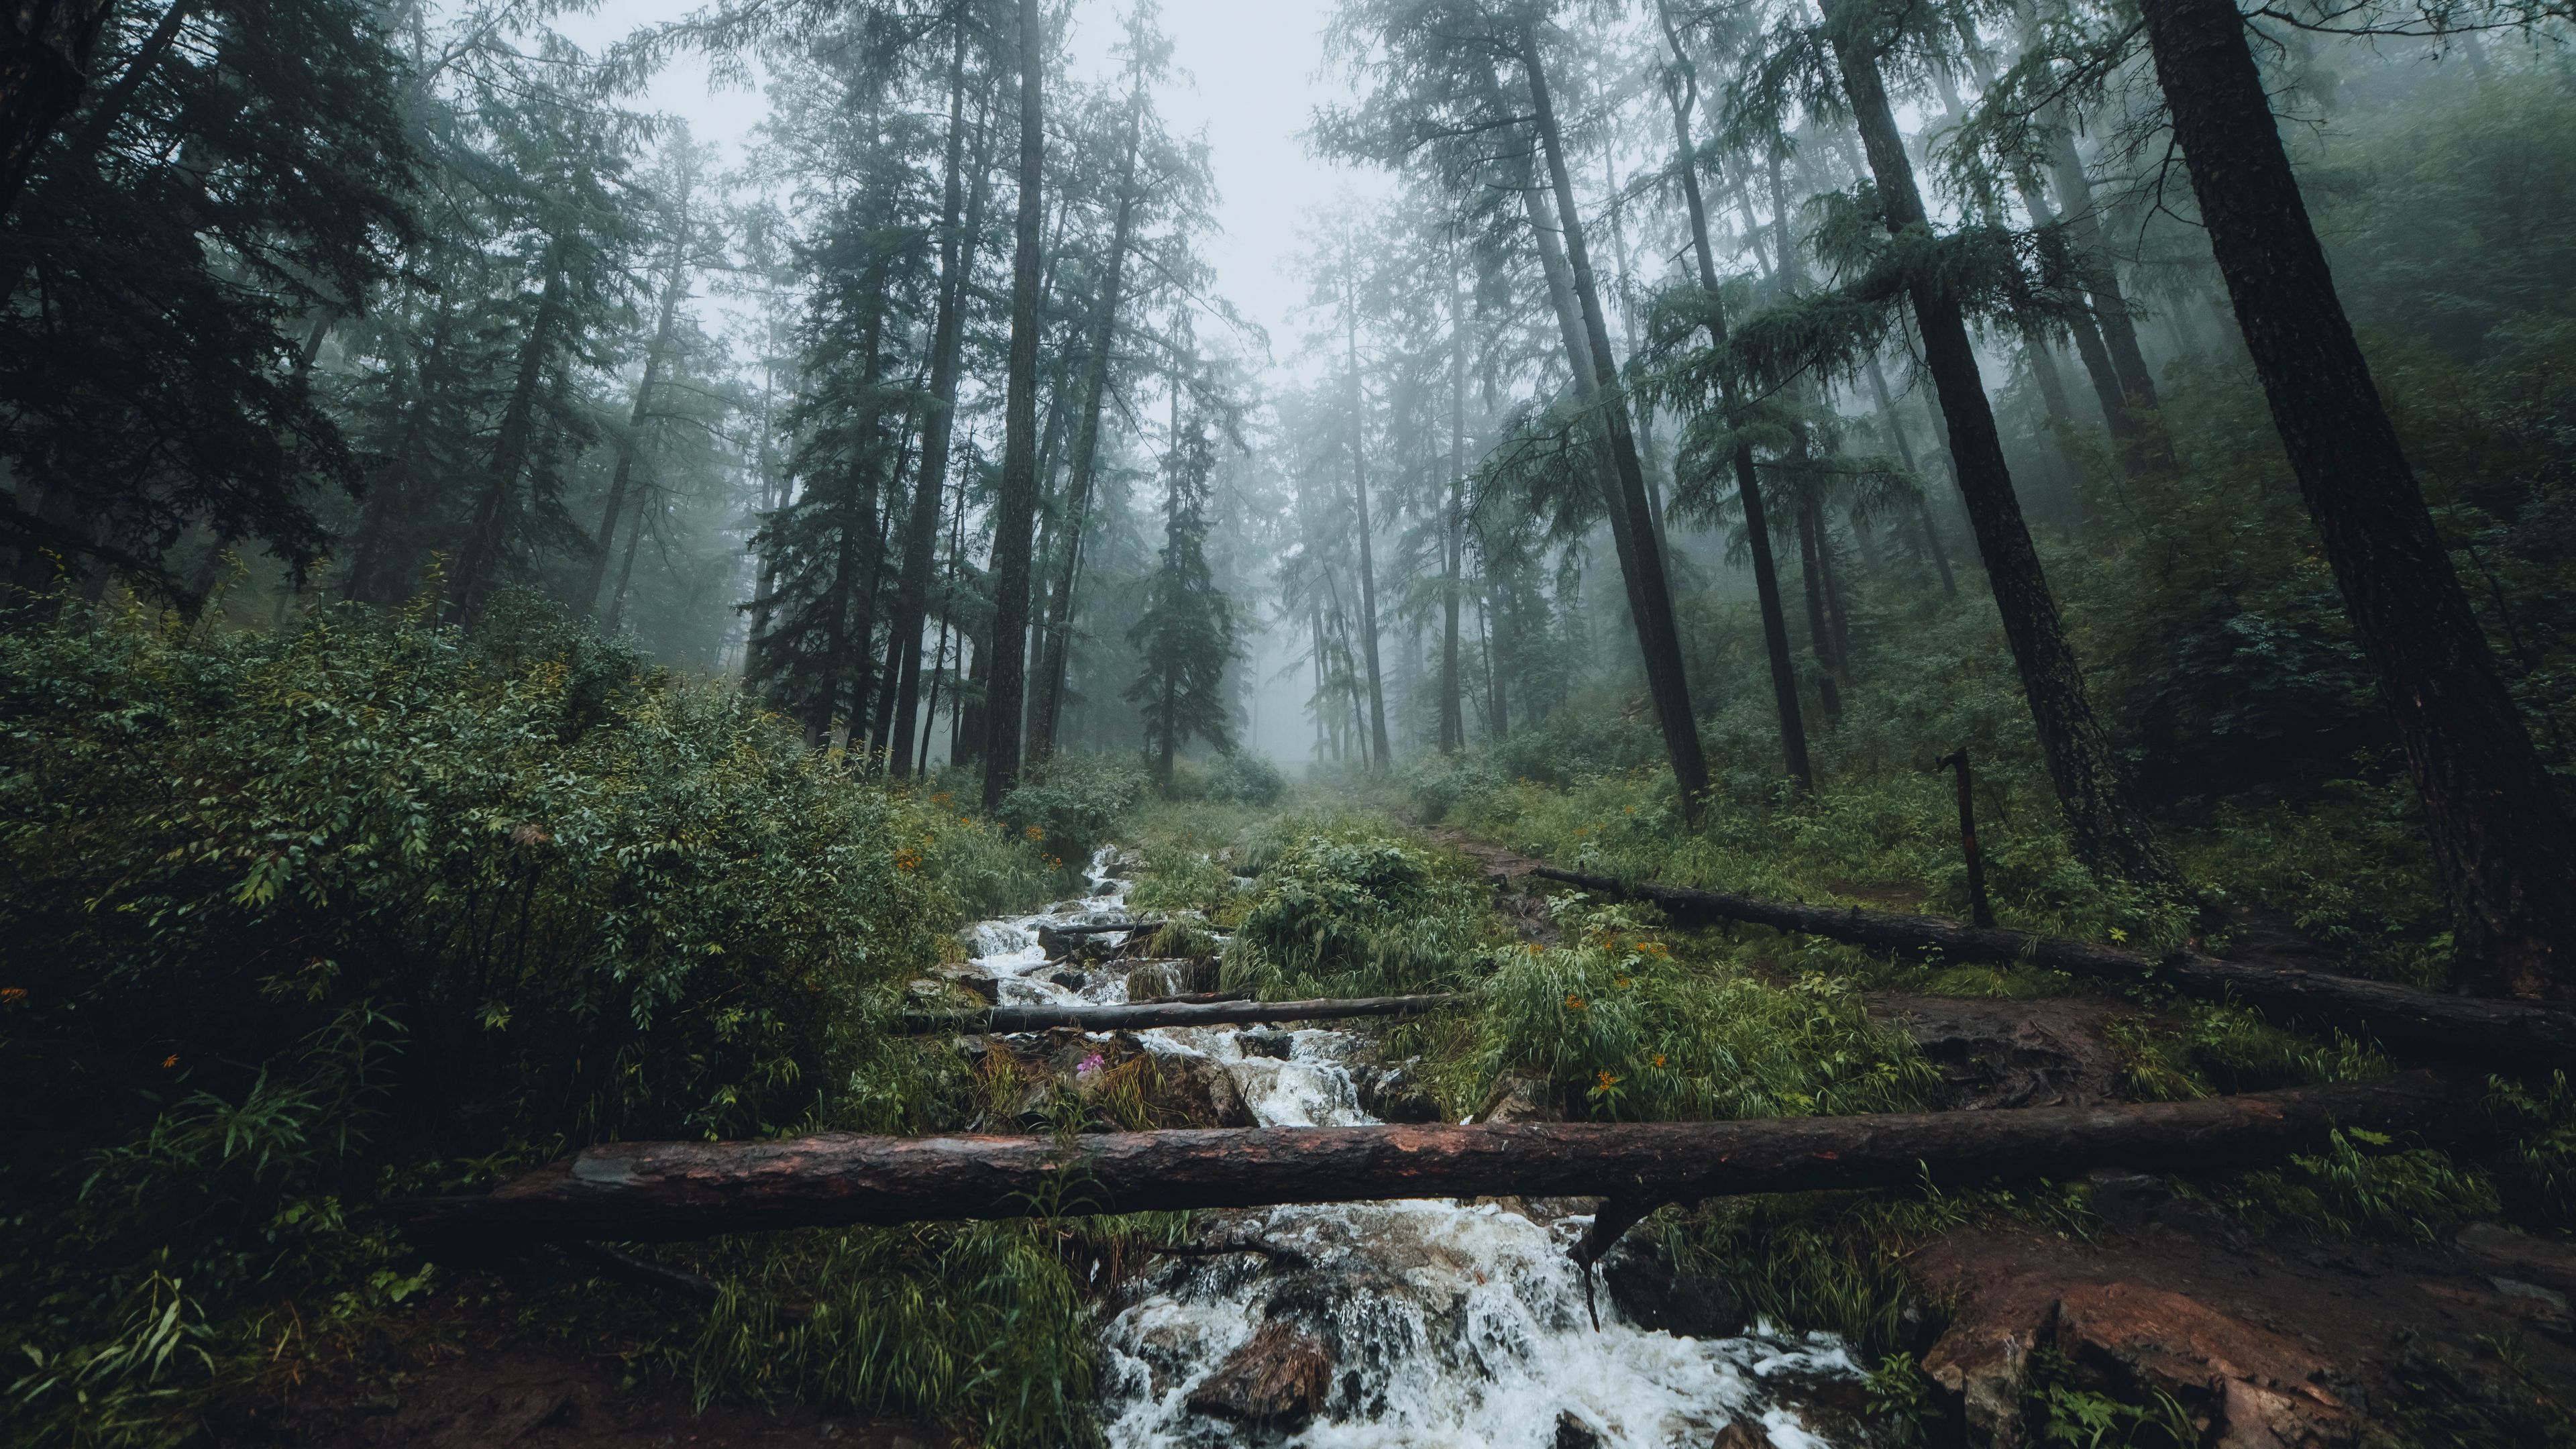 Download wallpaper 3840x2160 forest, stream, fog, trees, landscape 4k uhd 16:9 HD background